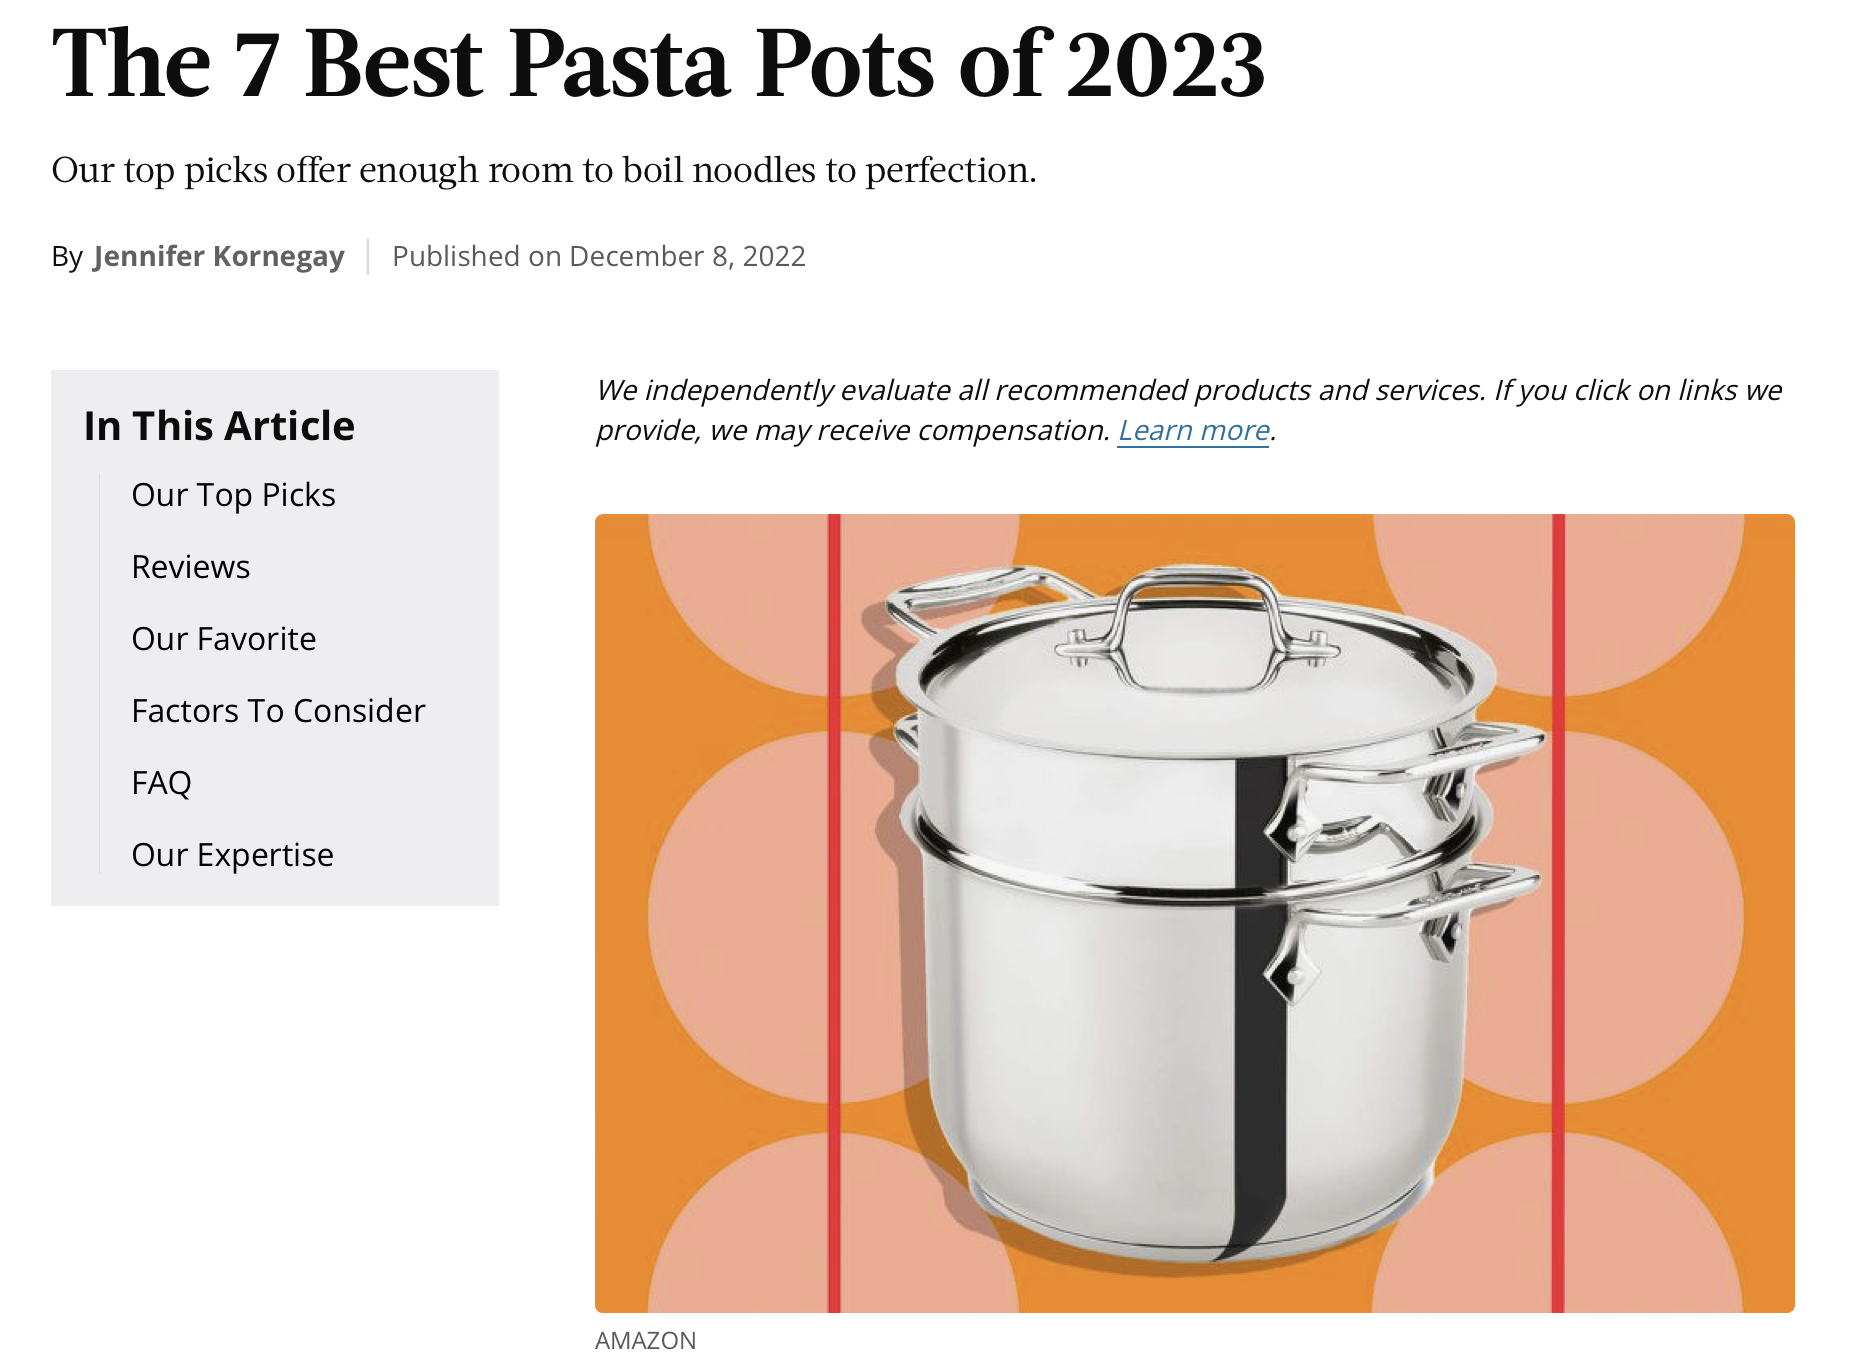 The 7 Best Pasta Pots of 2023